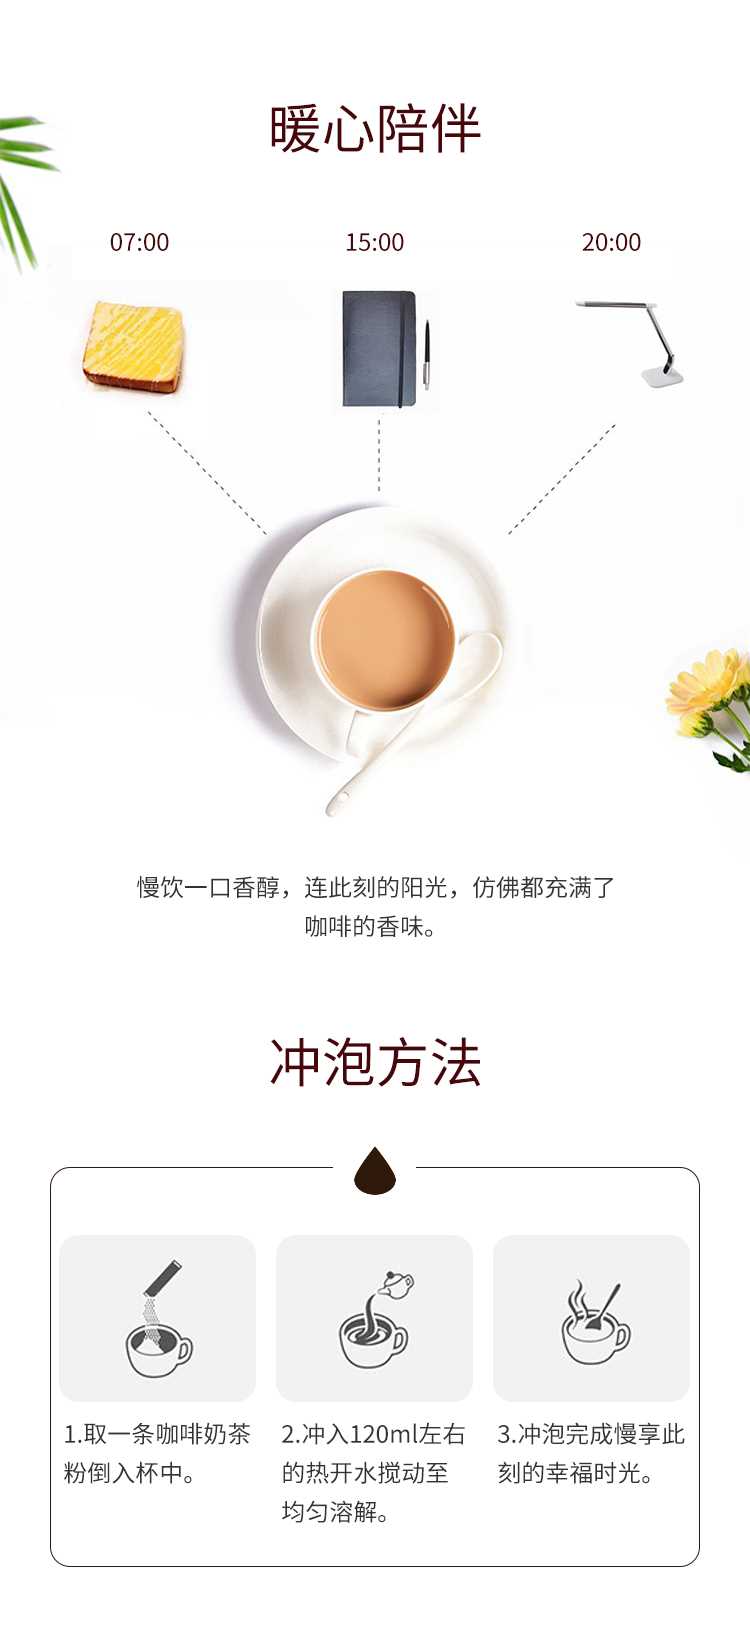 AGF-CAFE-LATORY棒状浓郁焦糖玛奇朵咖啡7枚18枚入_03.jpg